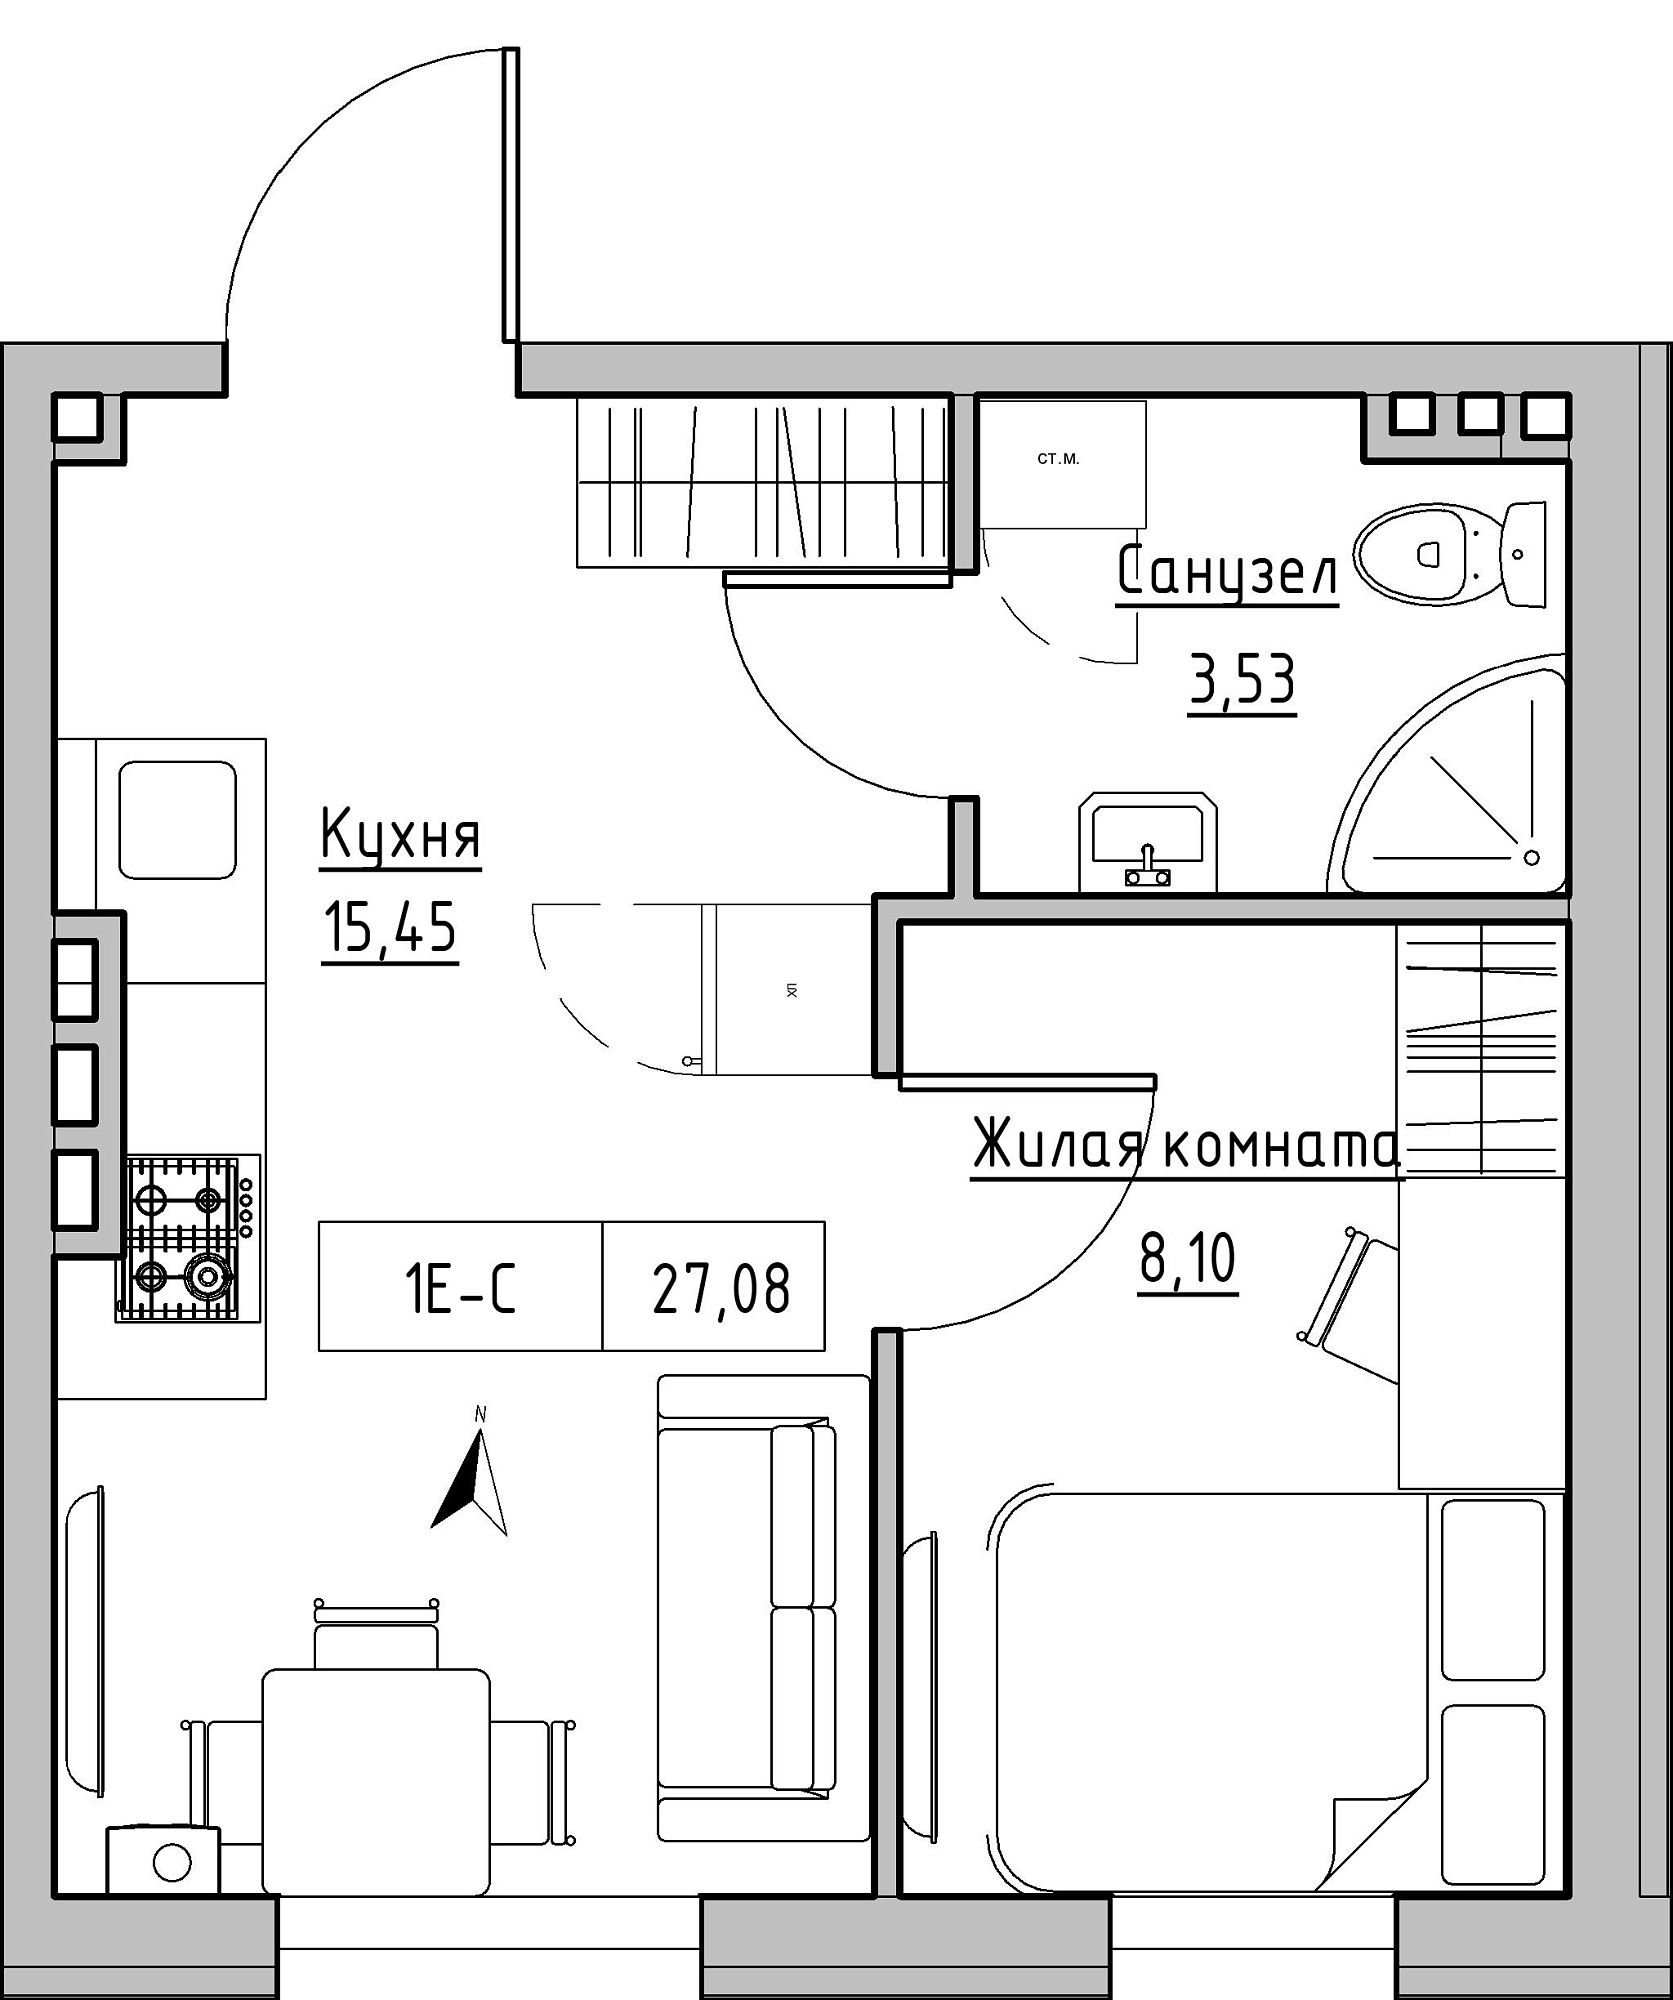 Planning 1-rm flats area 27.08m2, KS-024-04/0004.